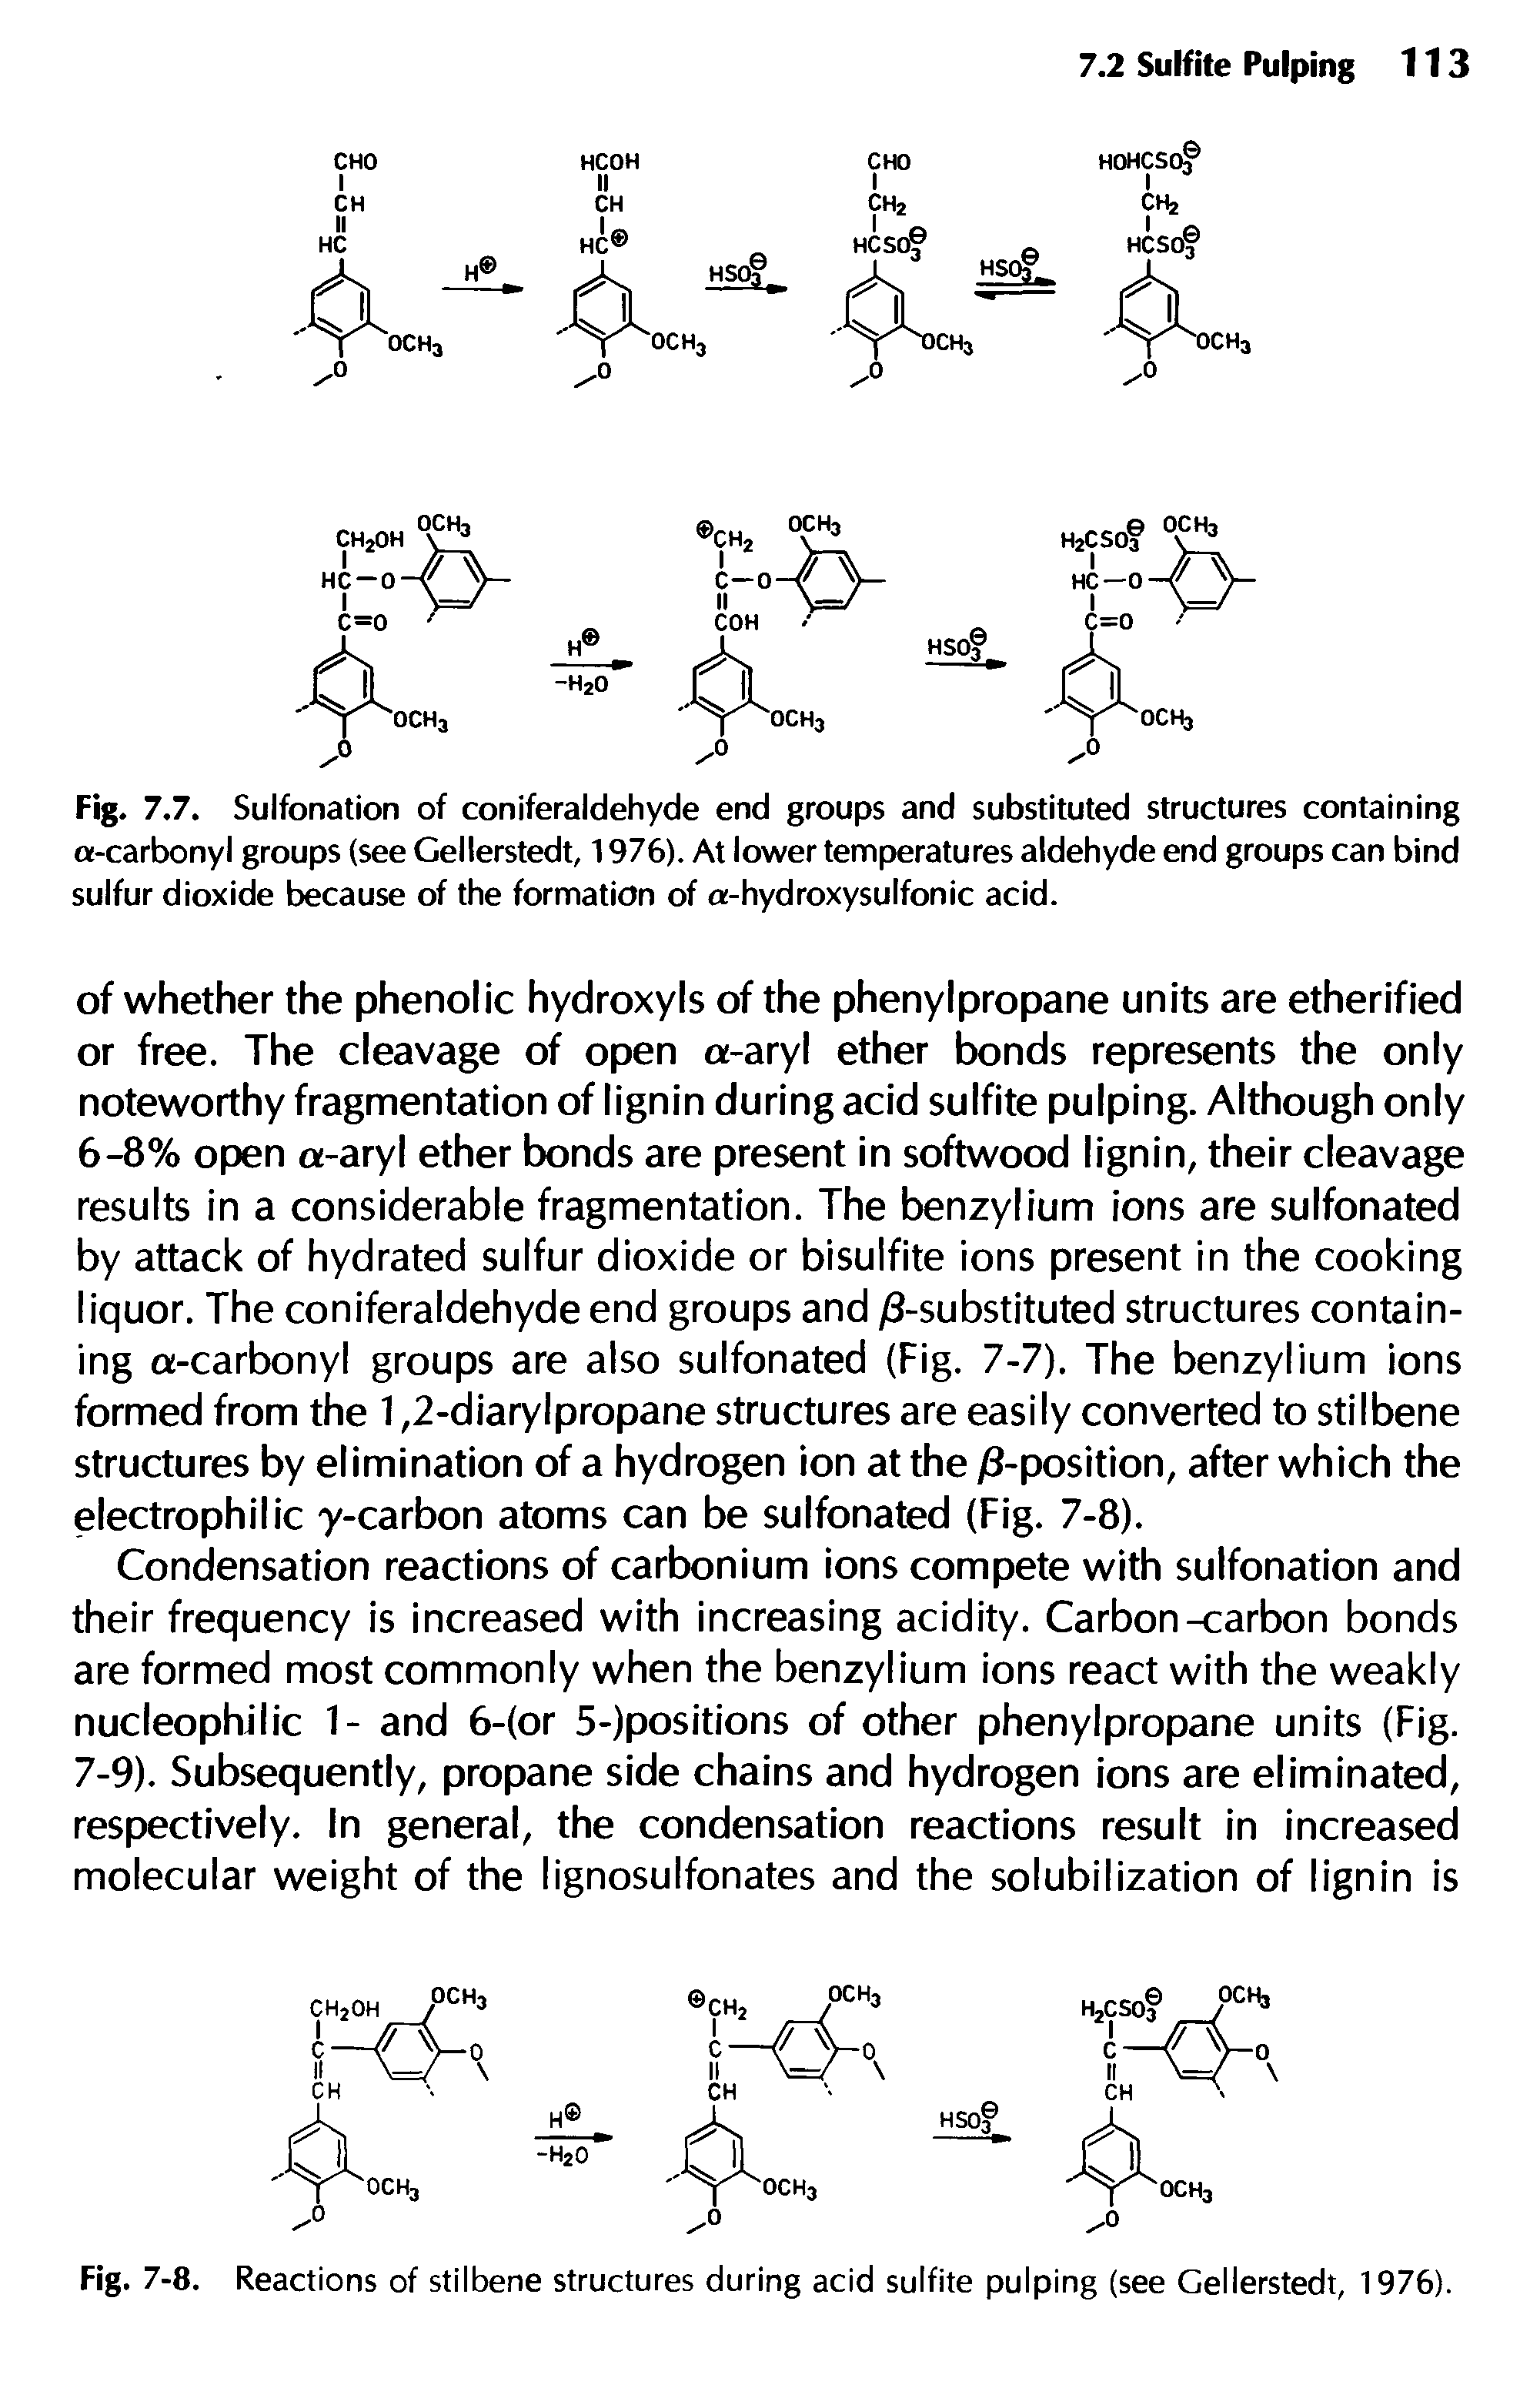 Fig. 7-8. Reactions of stilbene structures during acid sulfite pulping (see Gellerstedt, 1976).